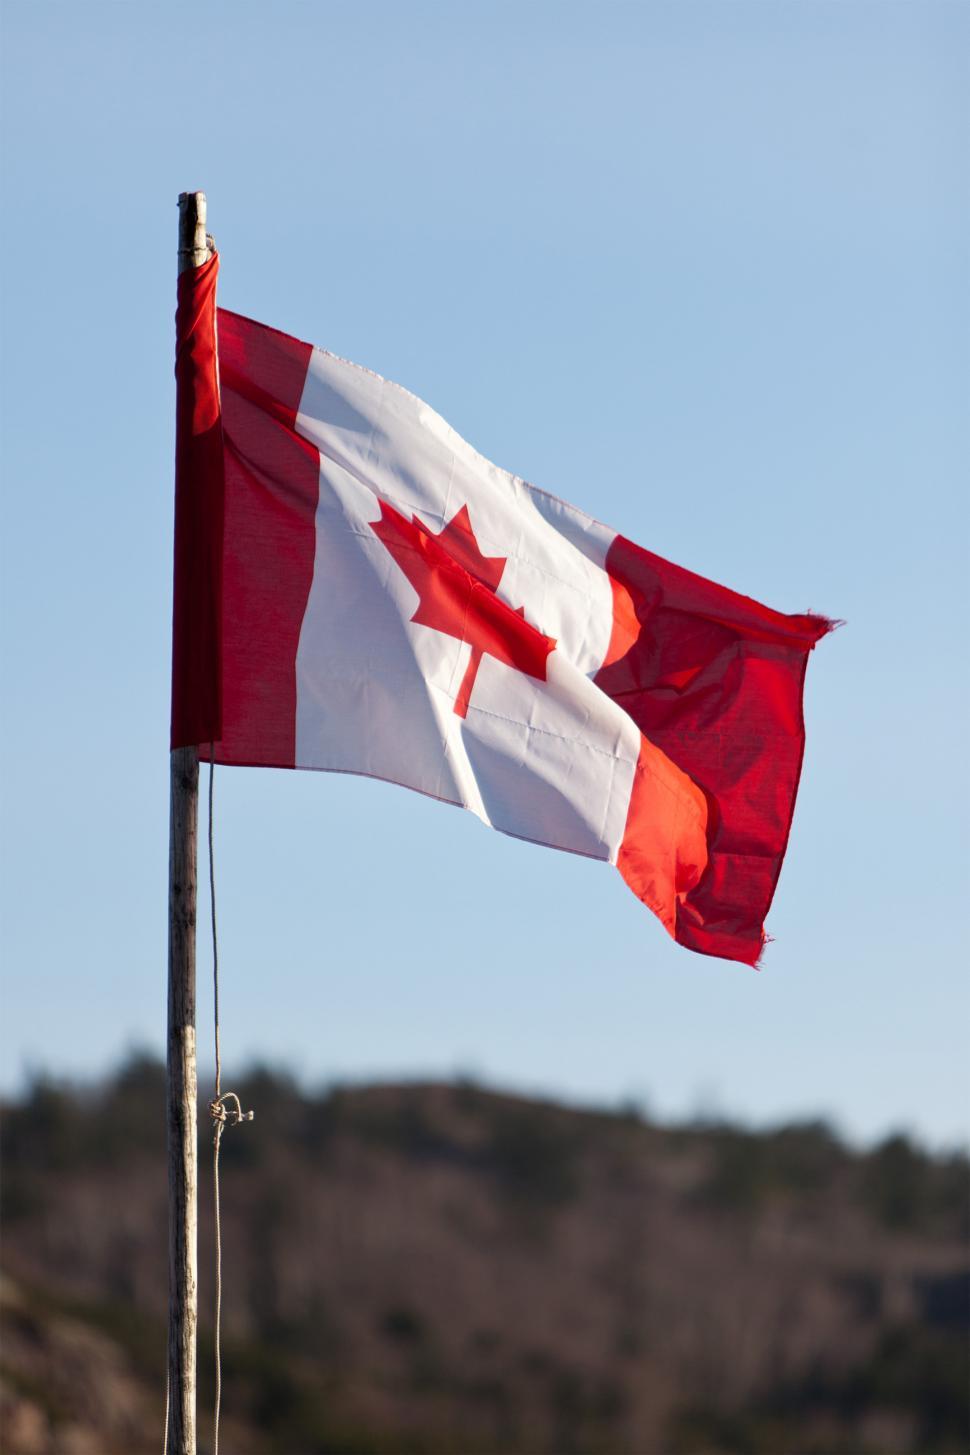 Free Image of Canadian Flag 